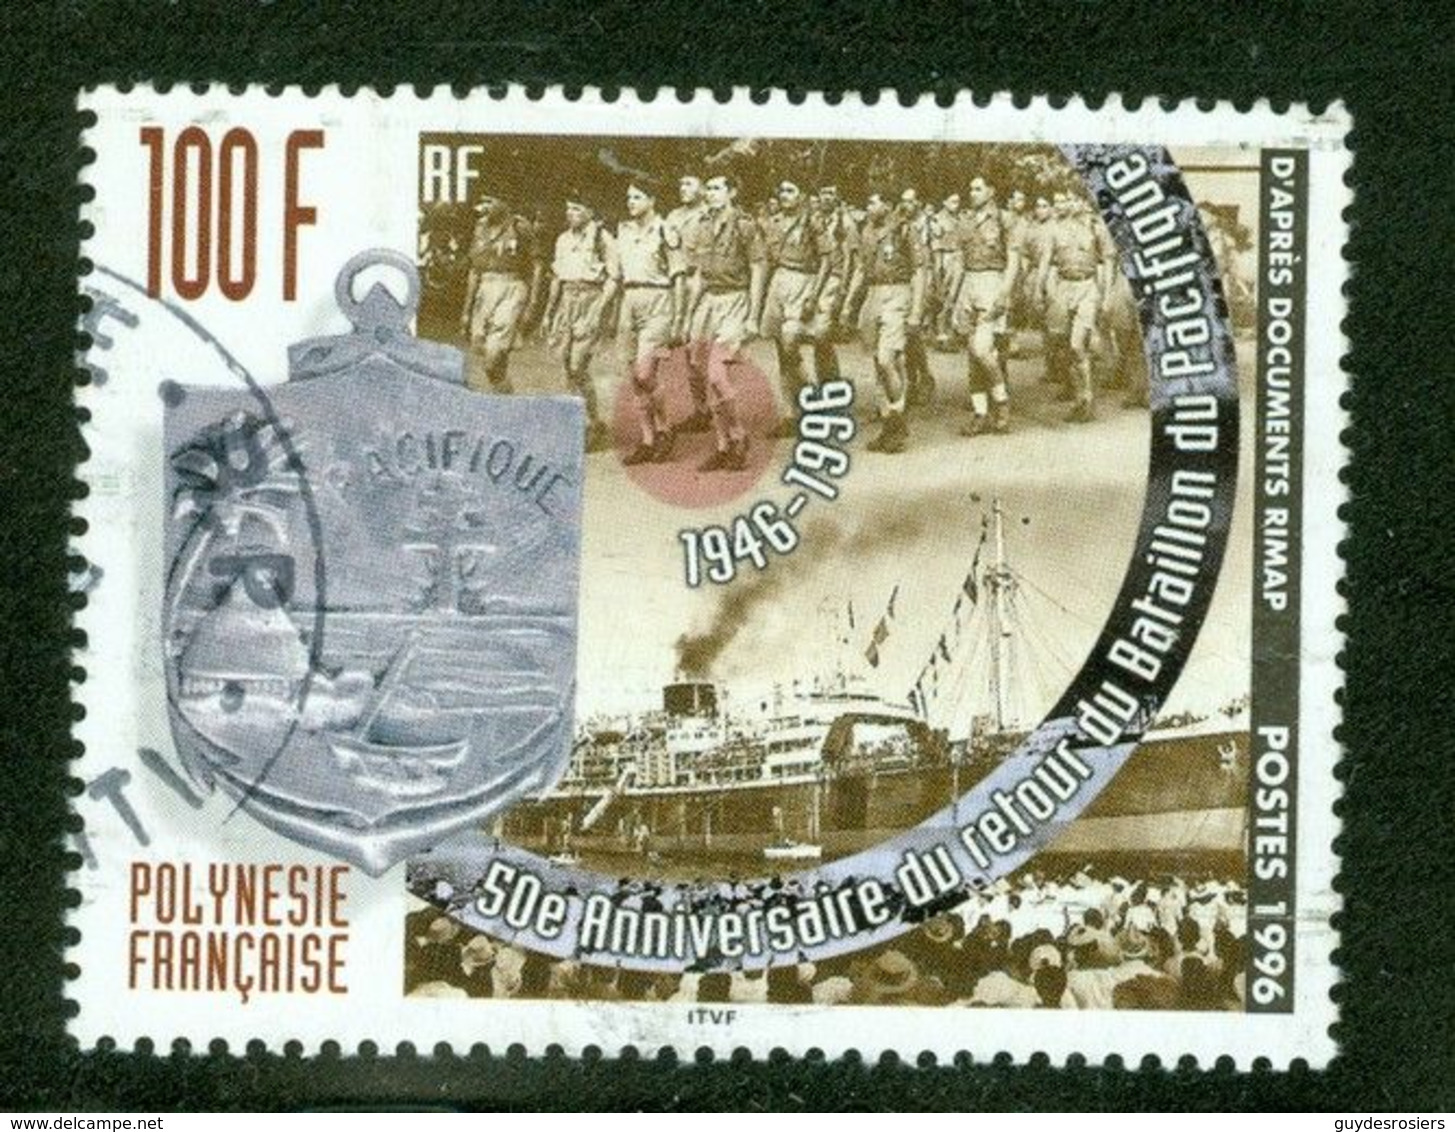 Bataillon Du Pacifique / W. W. II; Polynésie Française / French Polynesia; Scott # 682; Usagé (3442) - Used Stamps